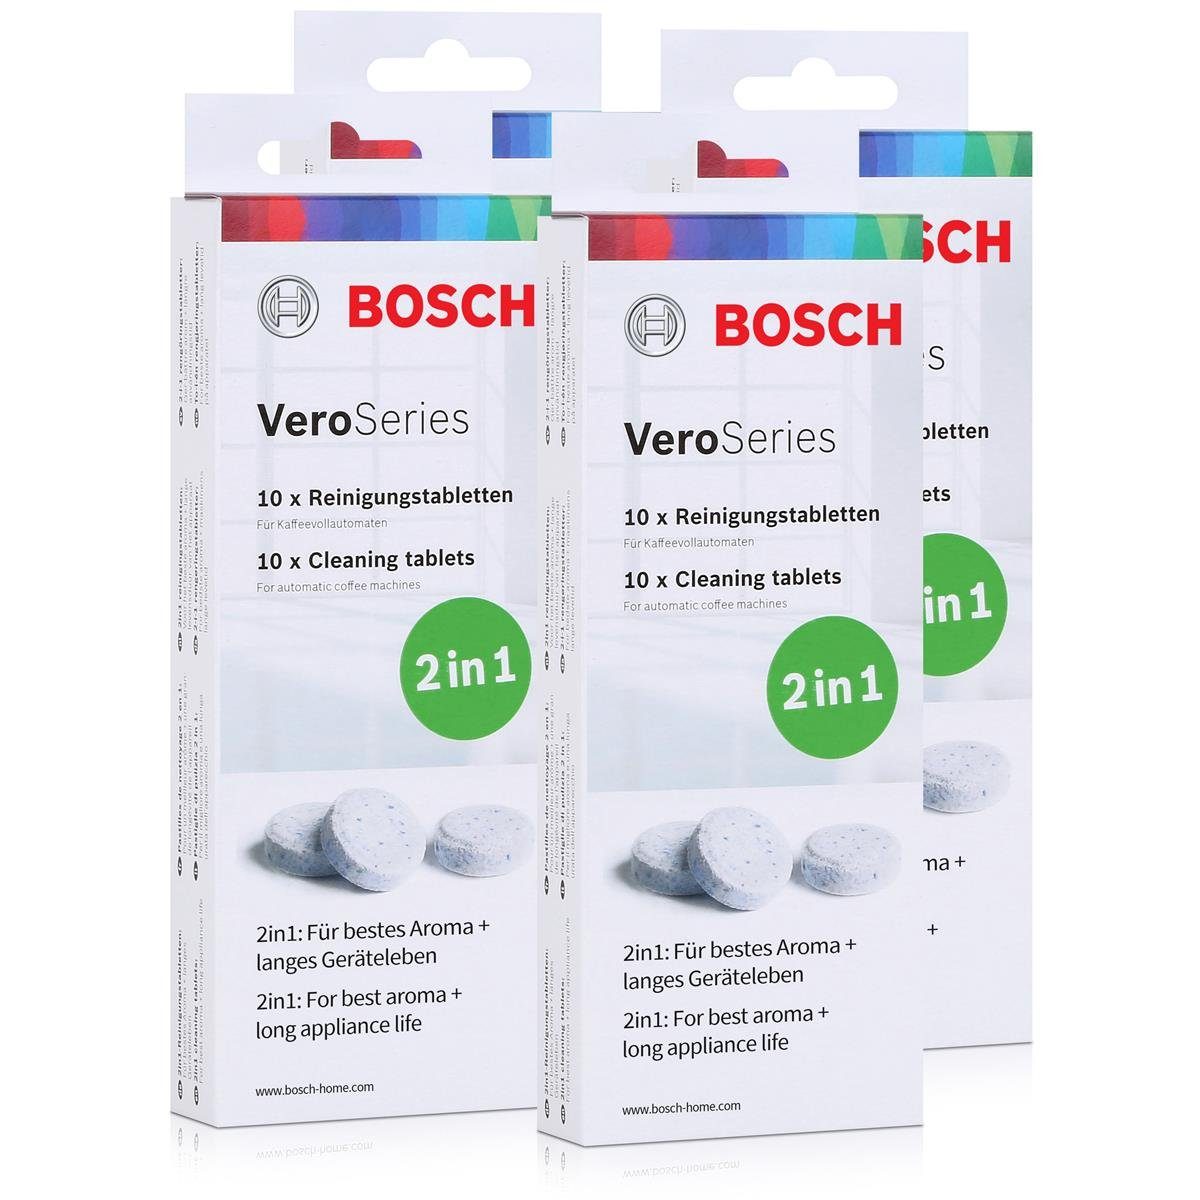 BOSCH Bosch VeroSeries TCZ8001 Reinigungstabletten 2in1 - 10 Tabletten (4er Reinigungstabletten